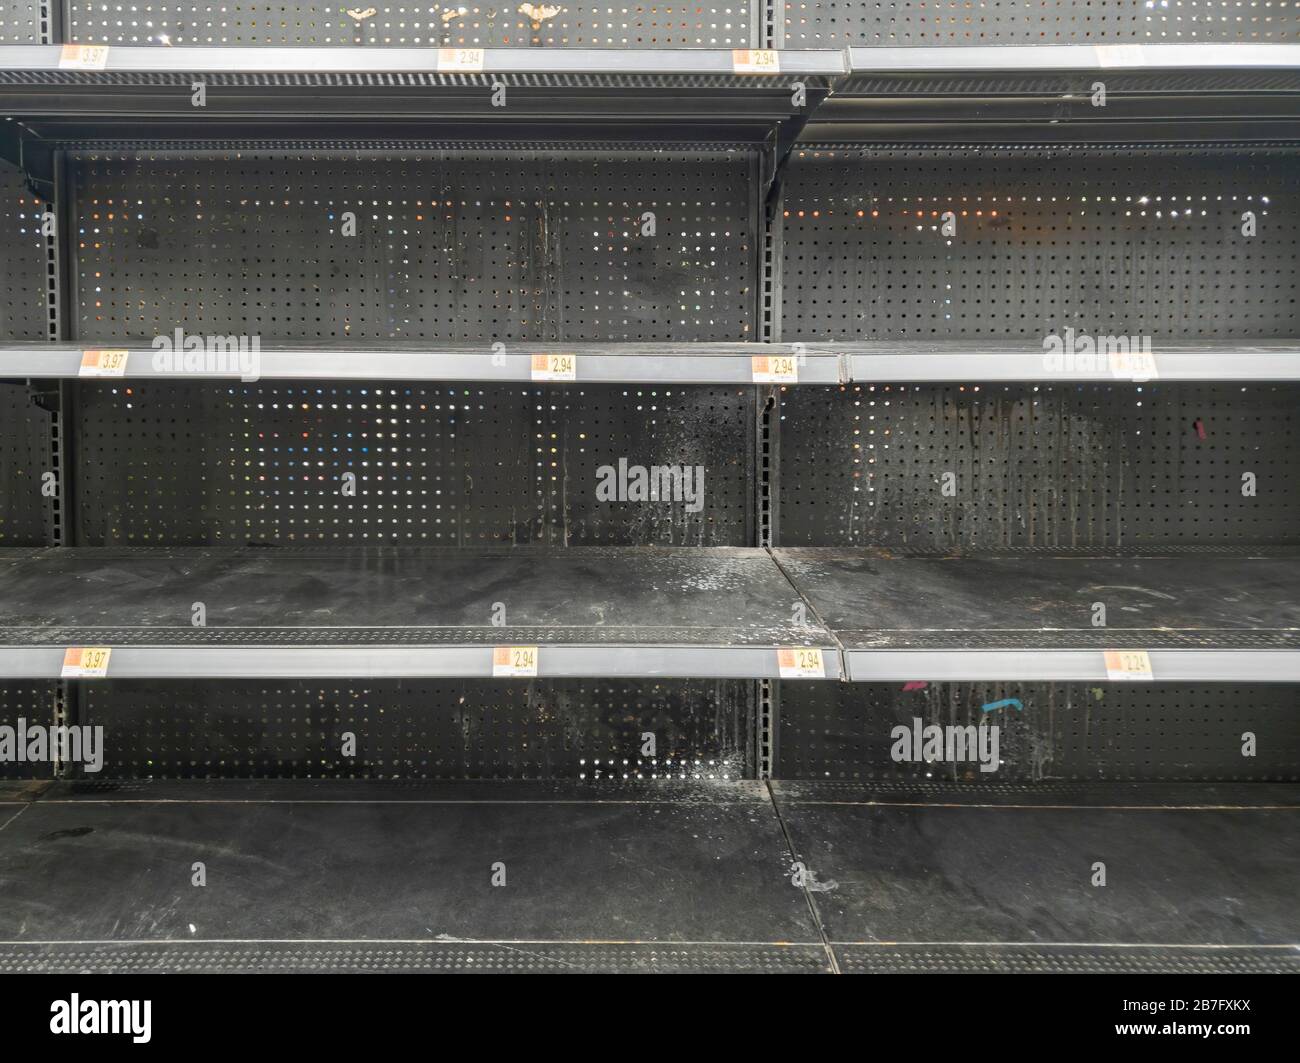 https://c8.alamy.com/comp/2B7FXKX/las-vegas-mar-4-2020-people-panic-buying-making-the-shelf-empty-in-a-grocery-store-2B7FXKX.jpg